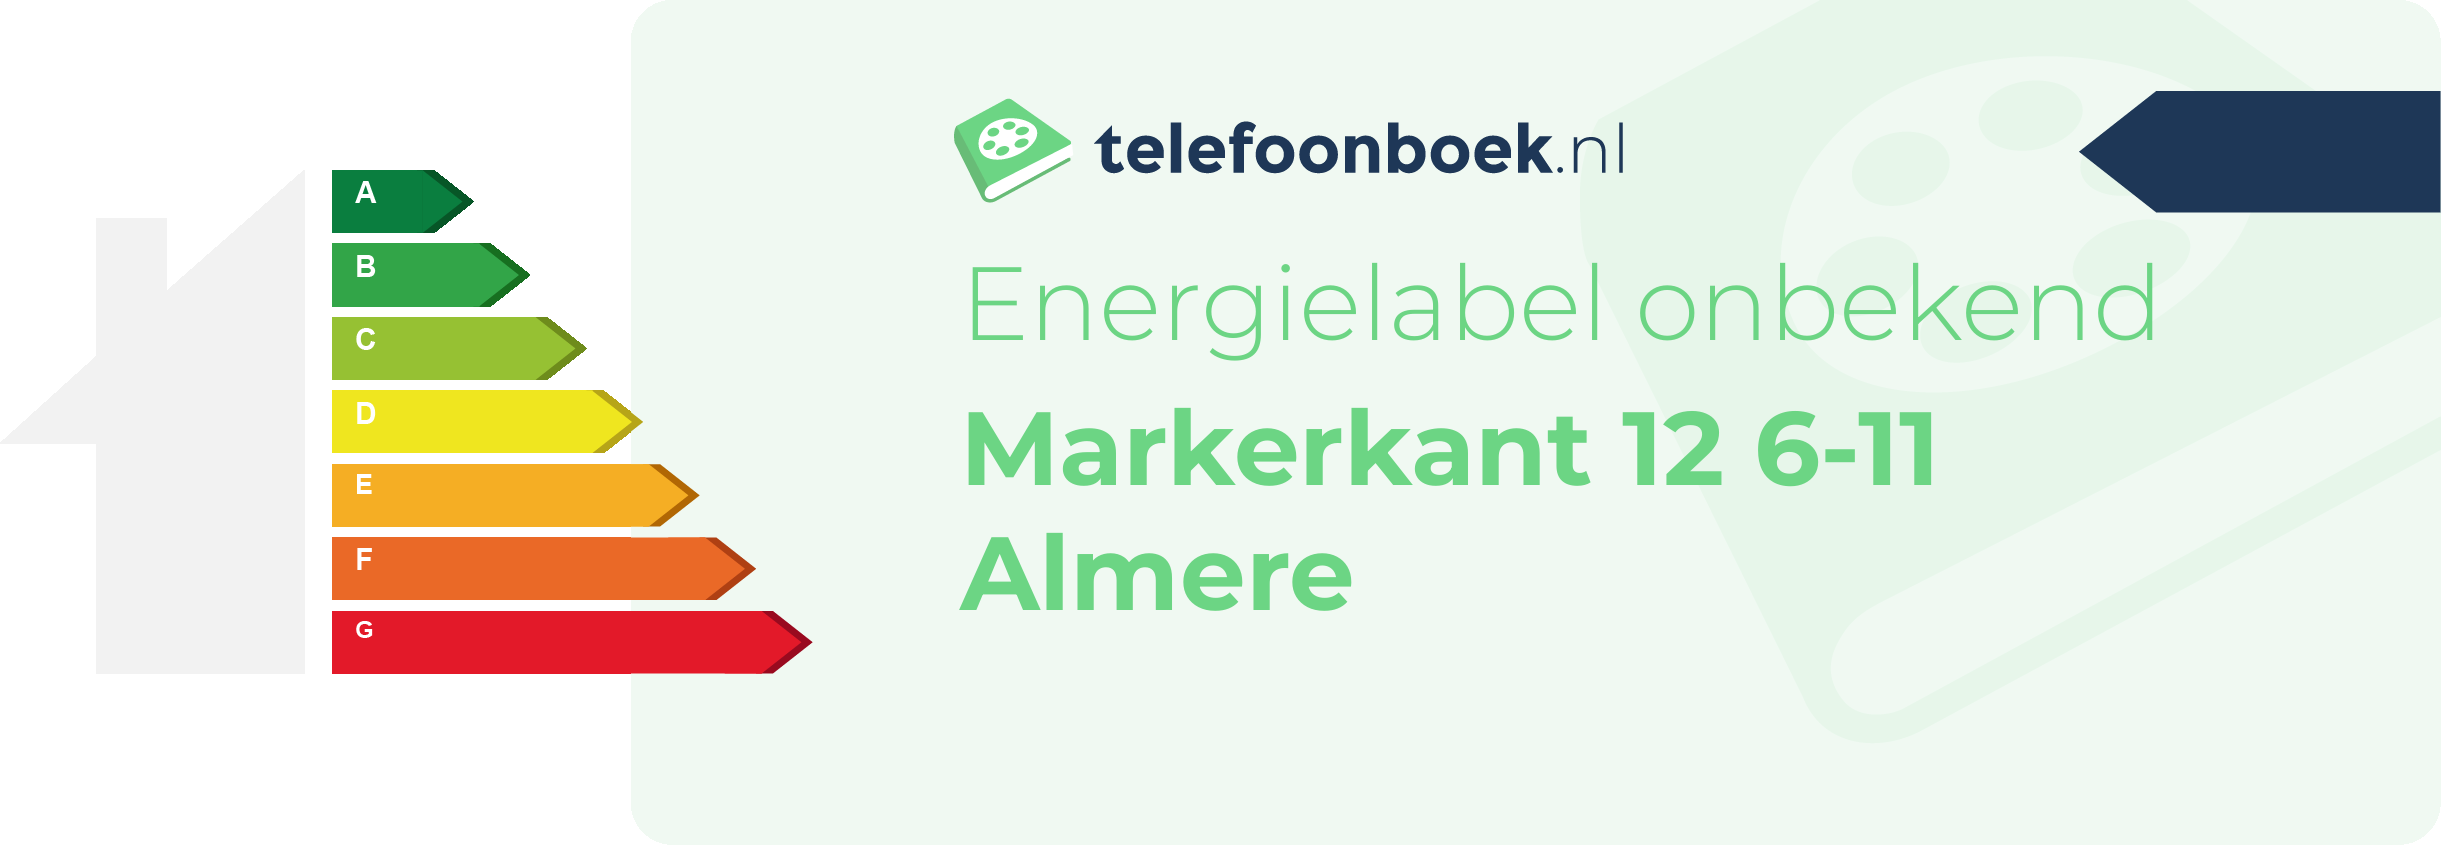 Energielabel Markerkant 12 6-11 Almere